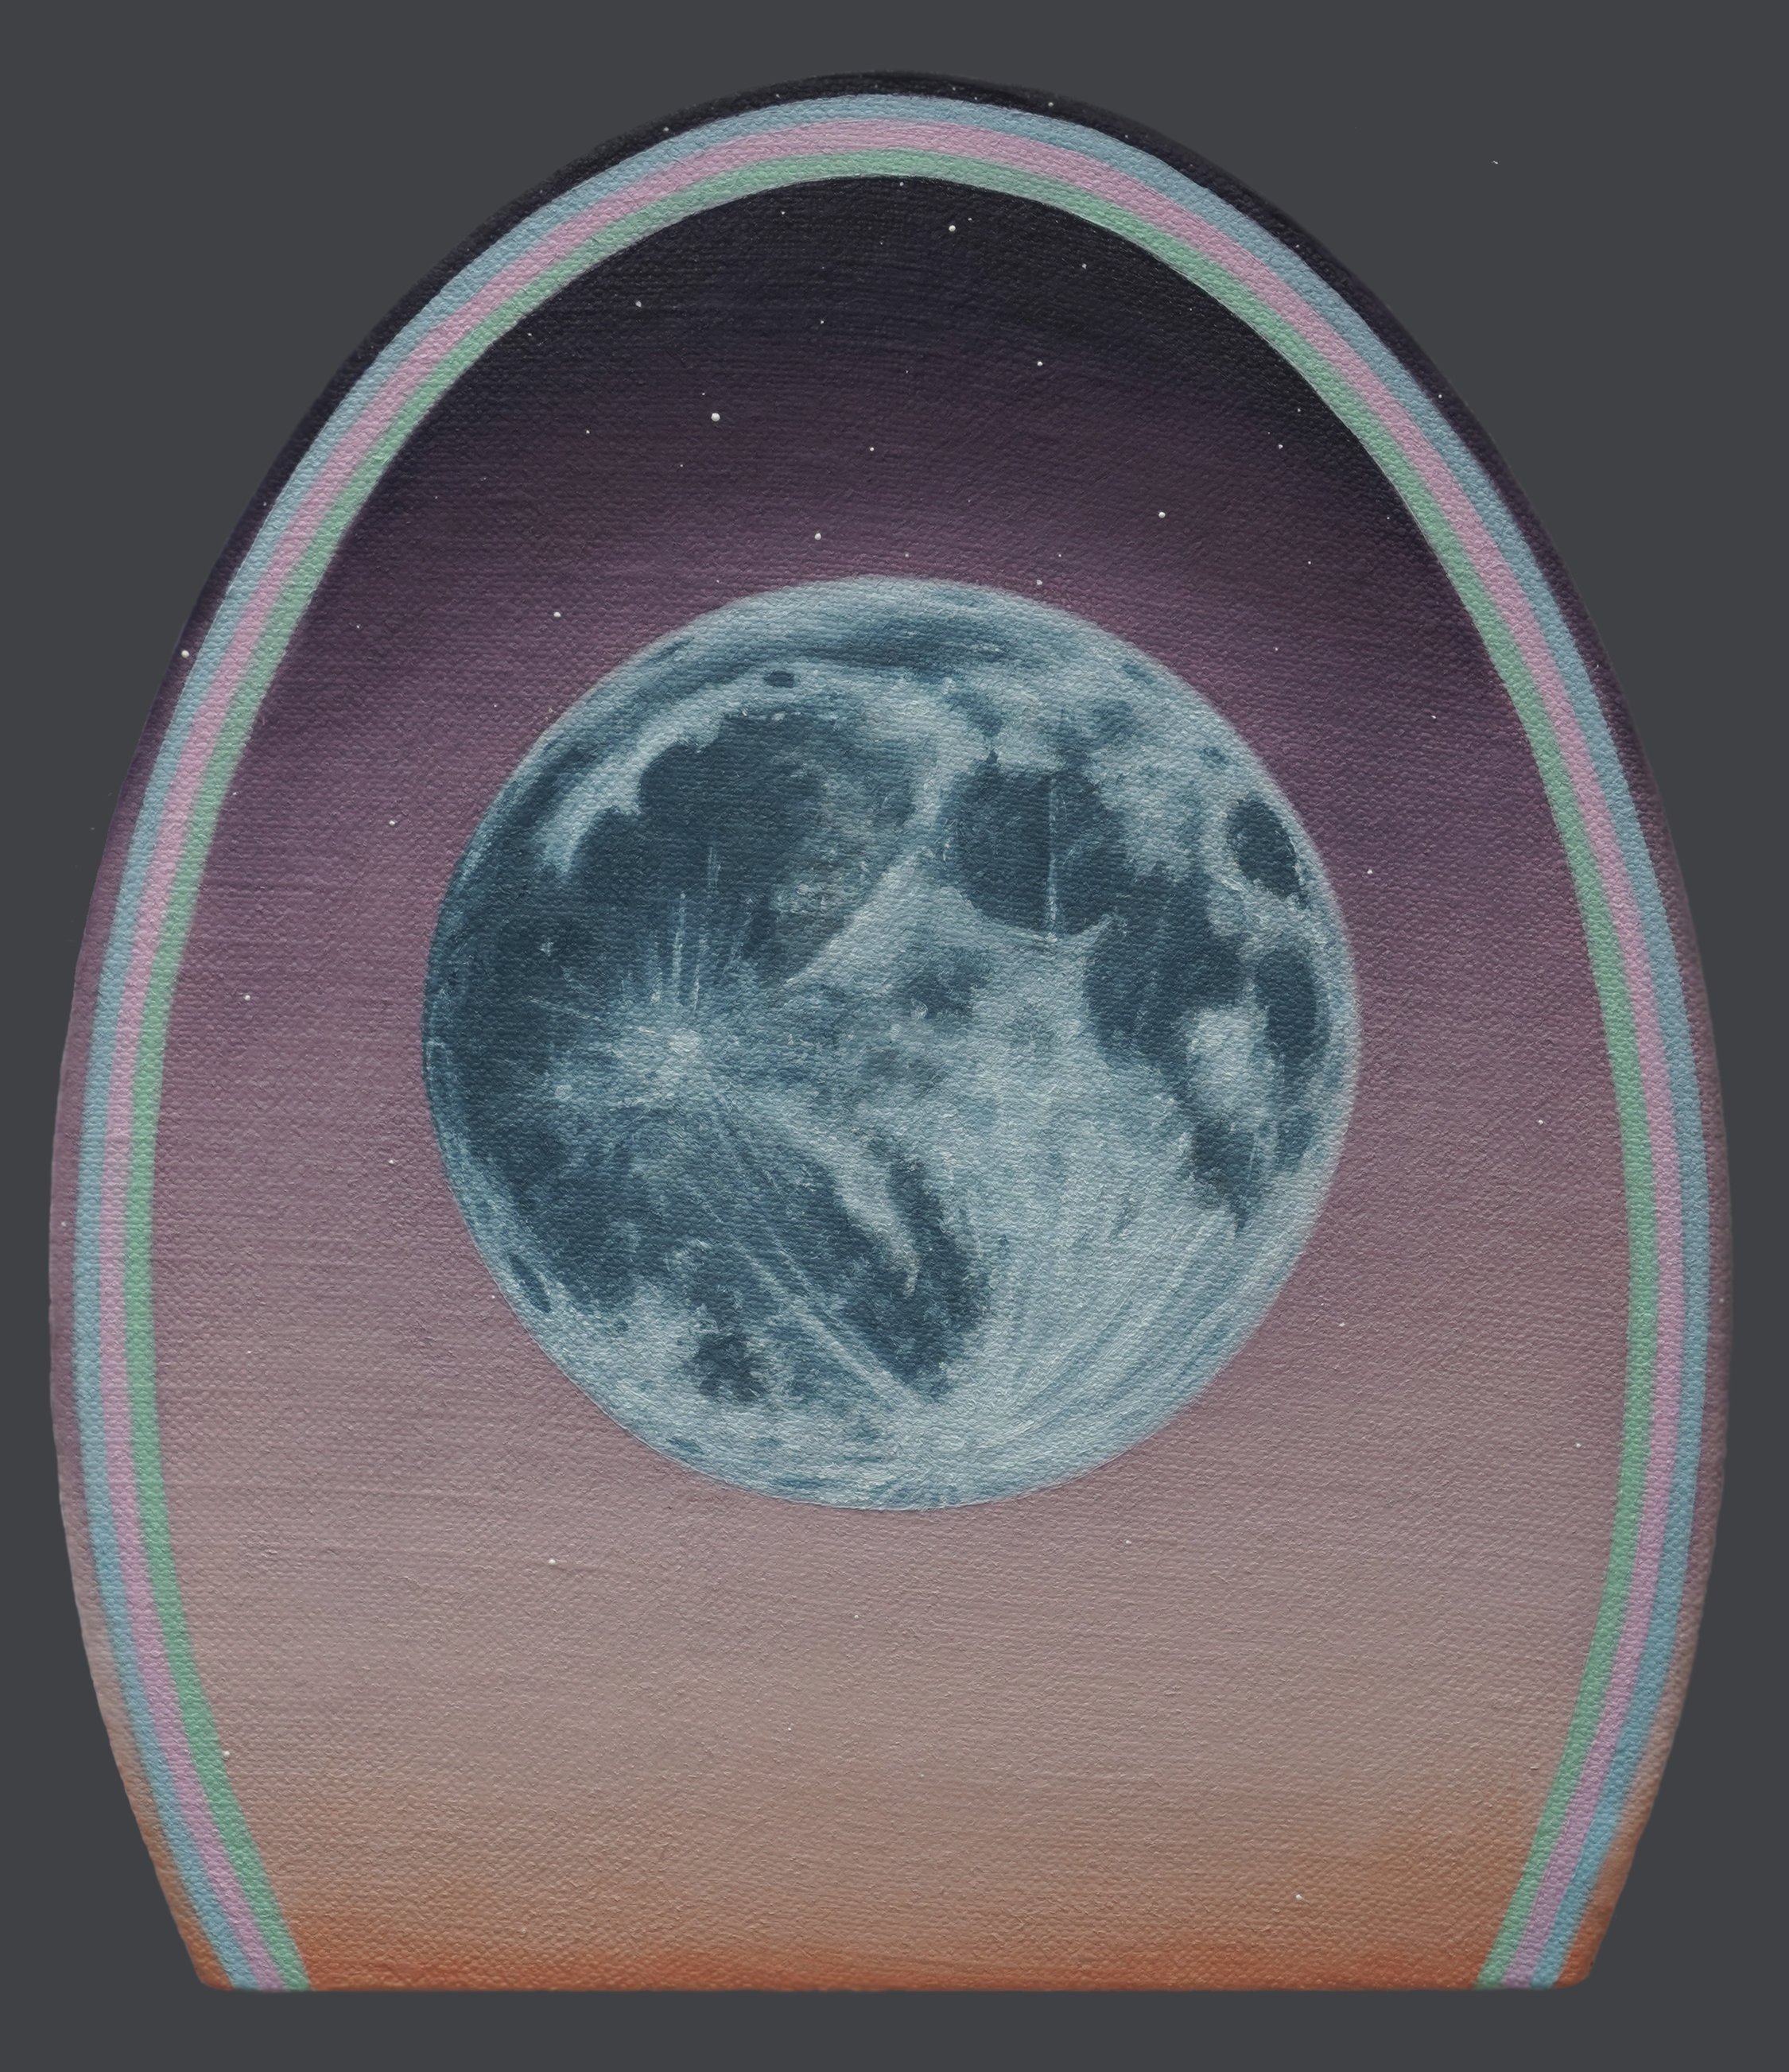 full moon in Scorpio, 10" x 9", oil + wax on linen over shaped panel, 2021